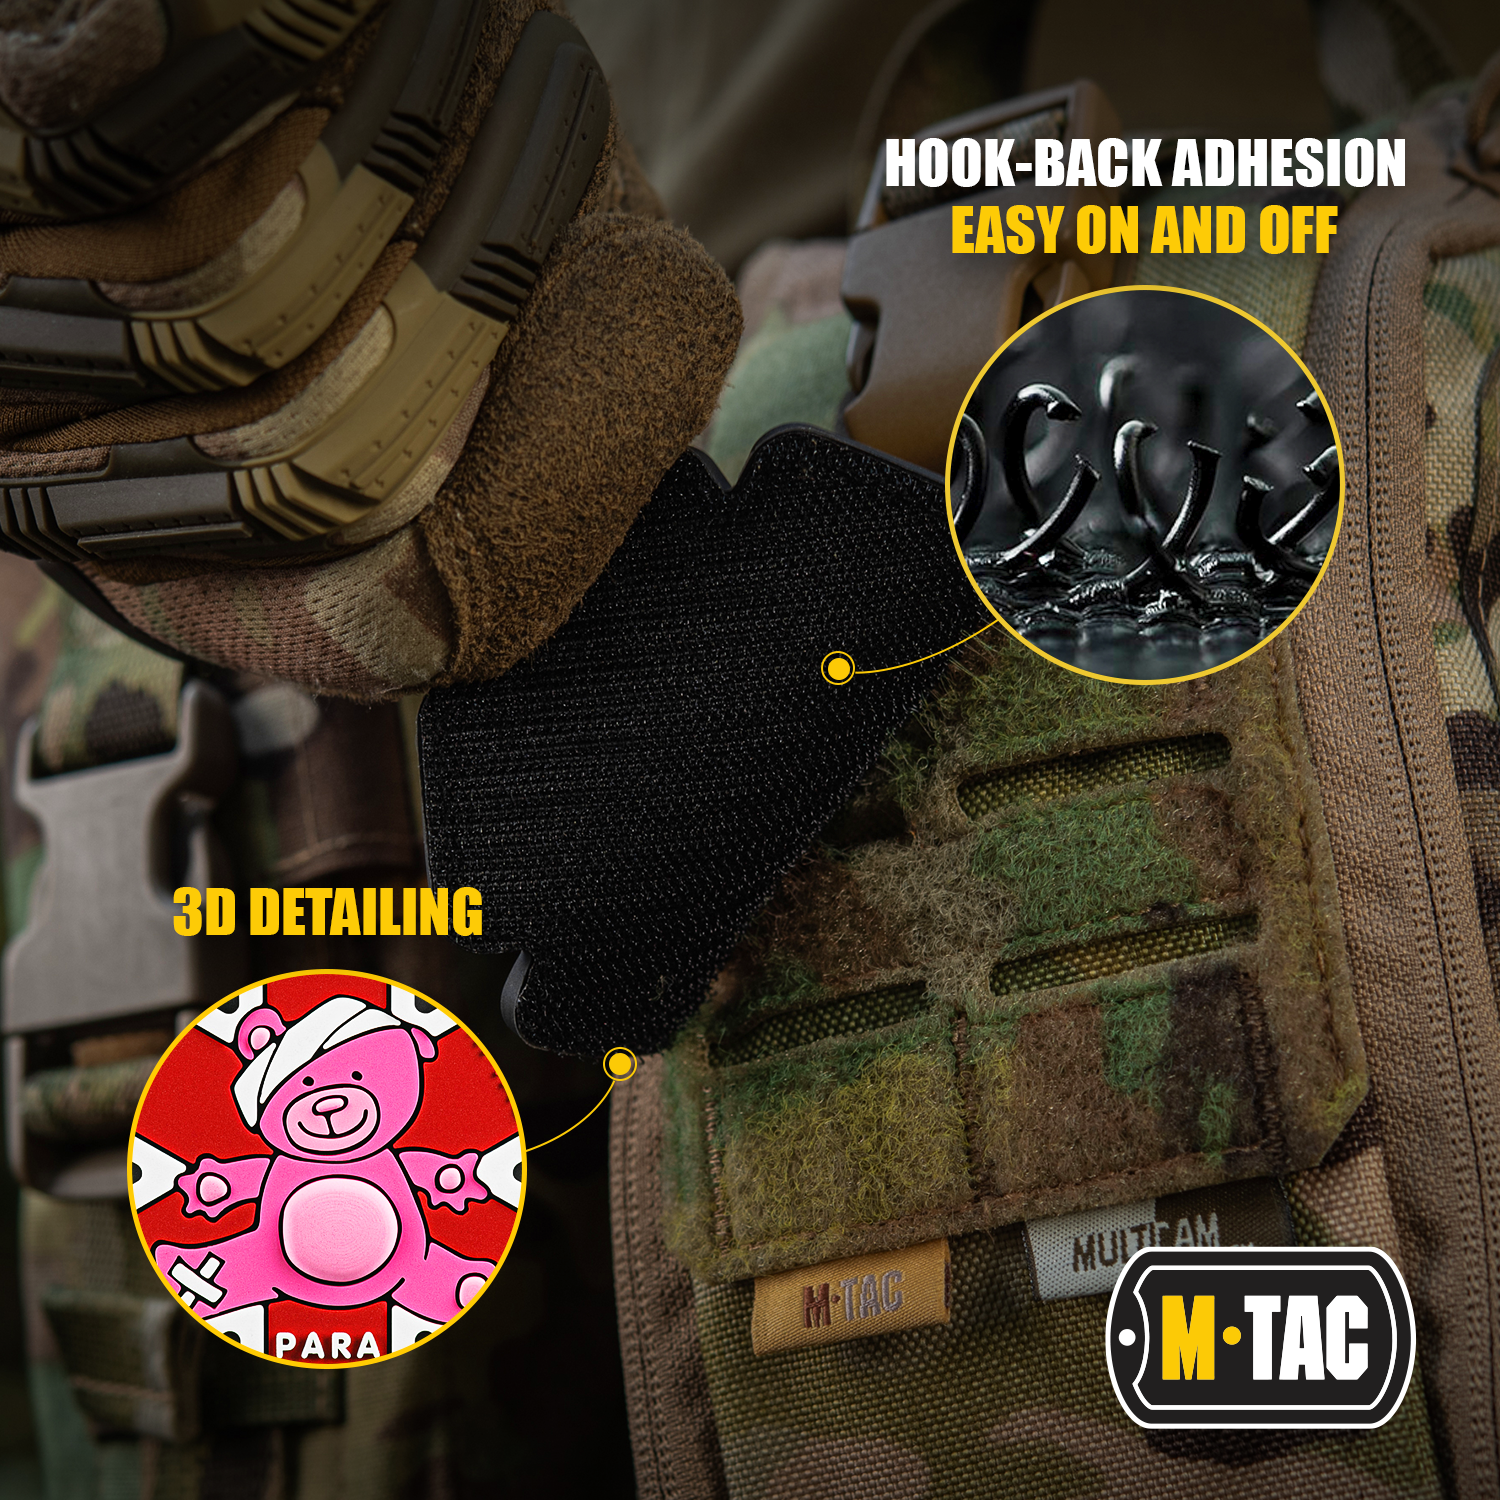 Ohrong Medic Rubber Patch 3D PVC Emblem Tactical ACU EMS EMT MED Paramedic  First Aid Morale Skull Military Hook Fasteners Badge for Bag Backpack First